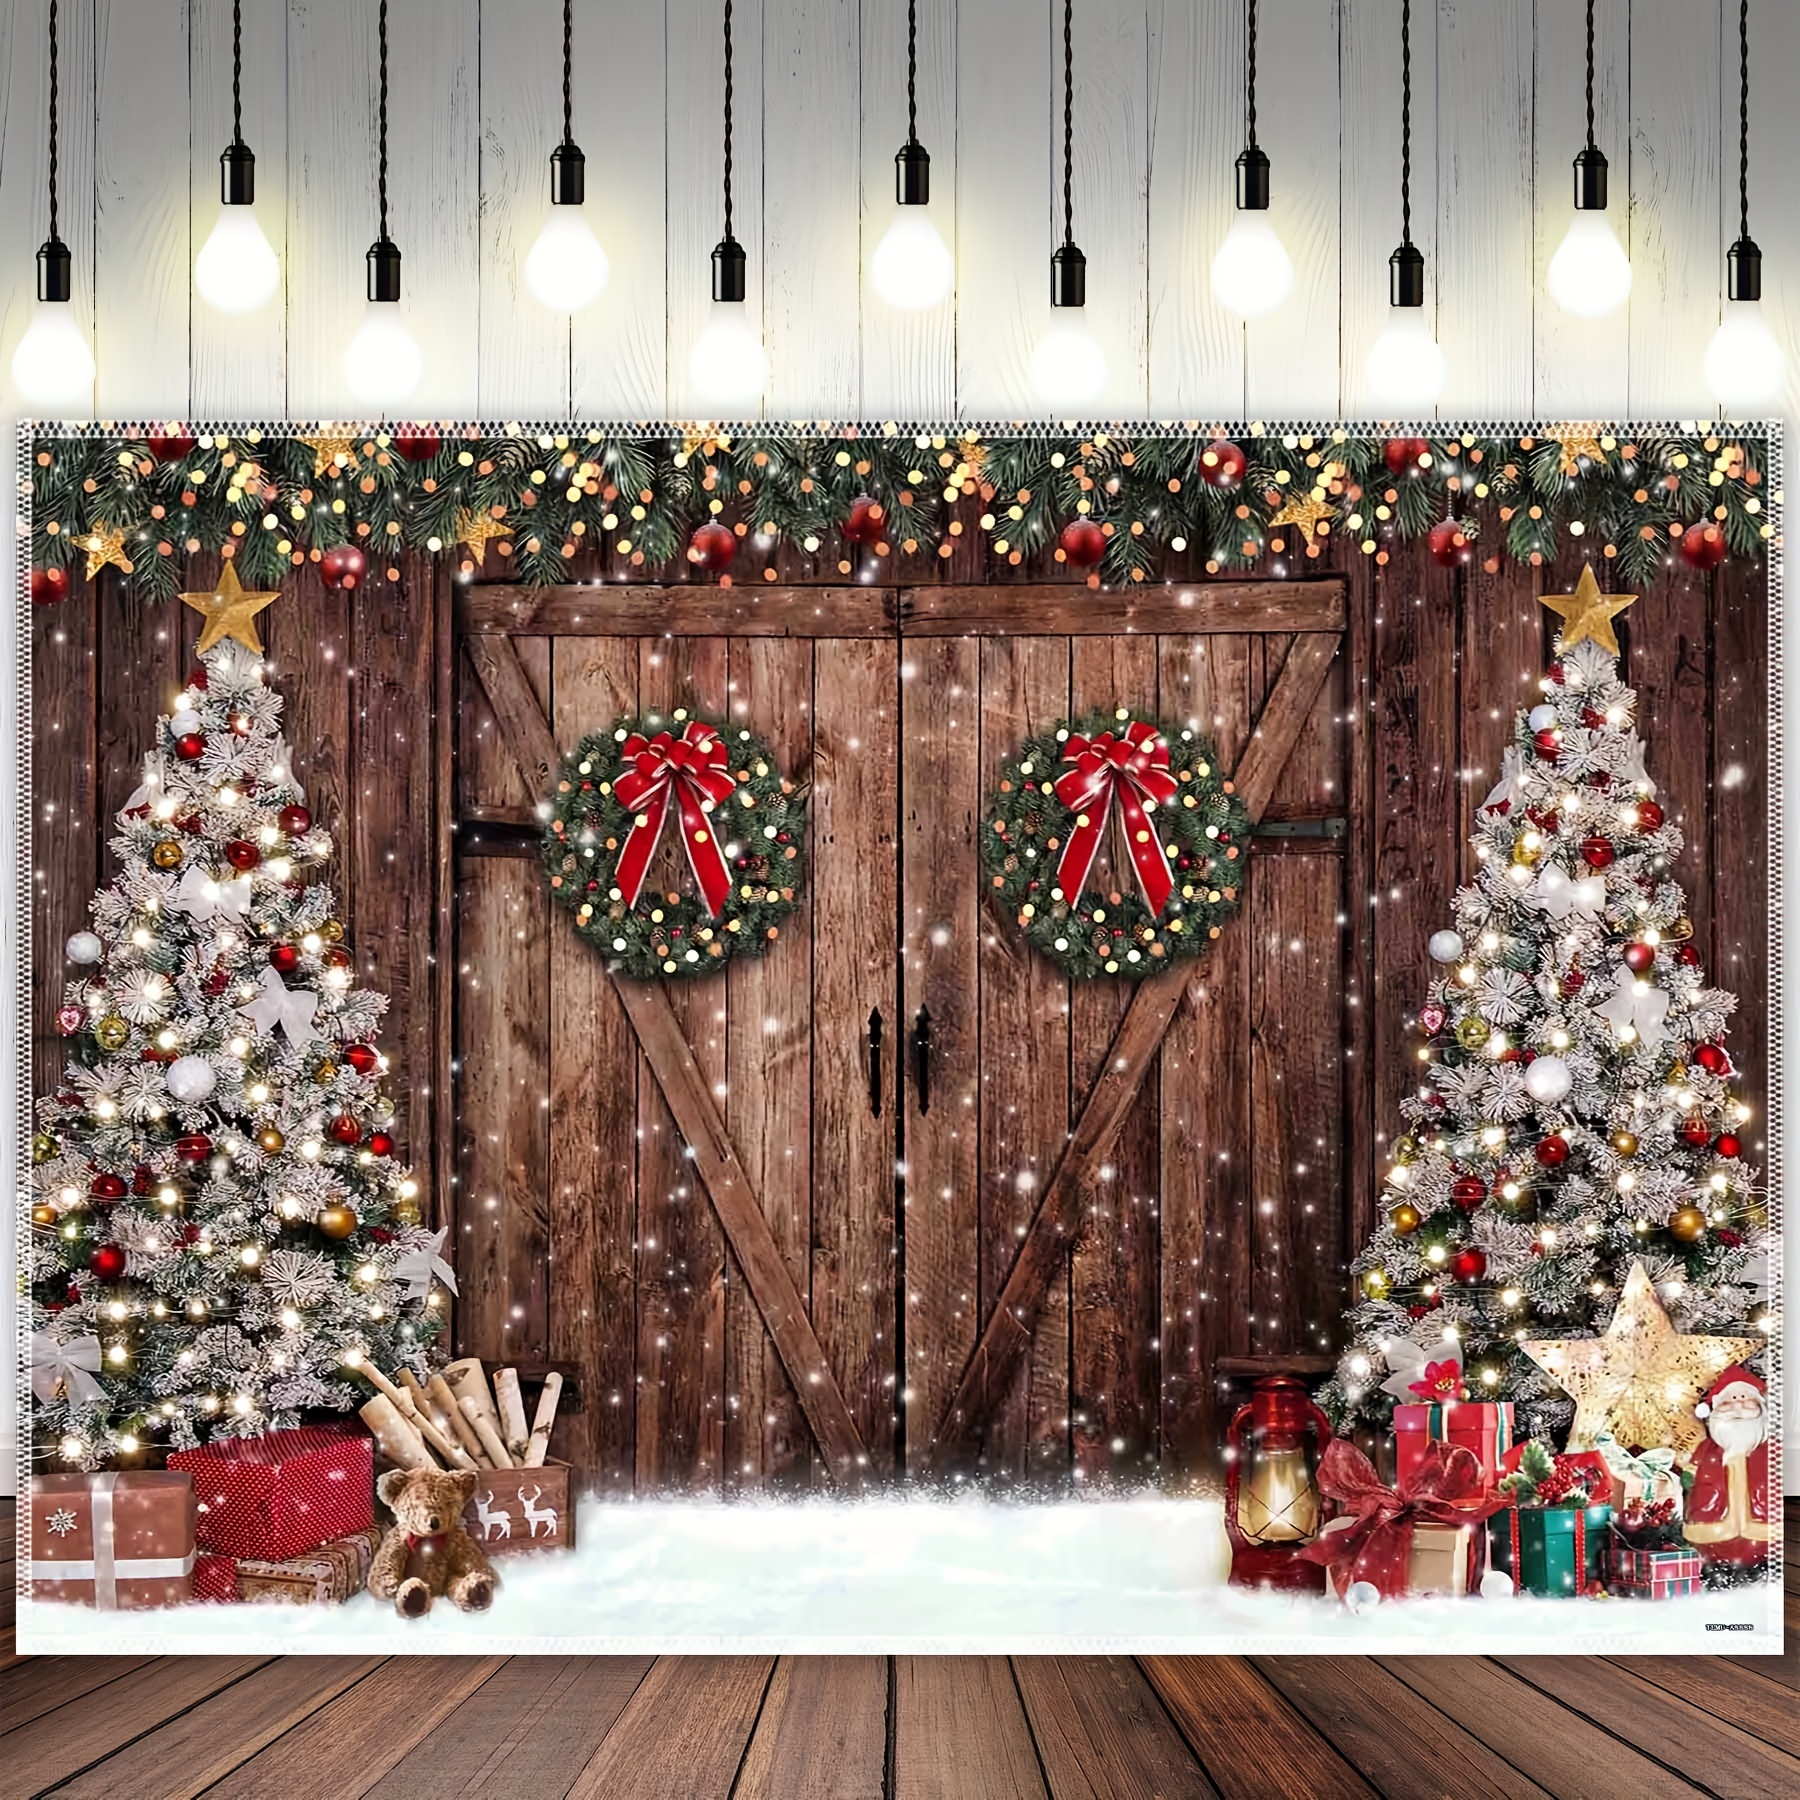 500+] Christmas Backgrounds